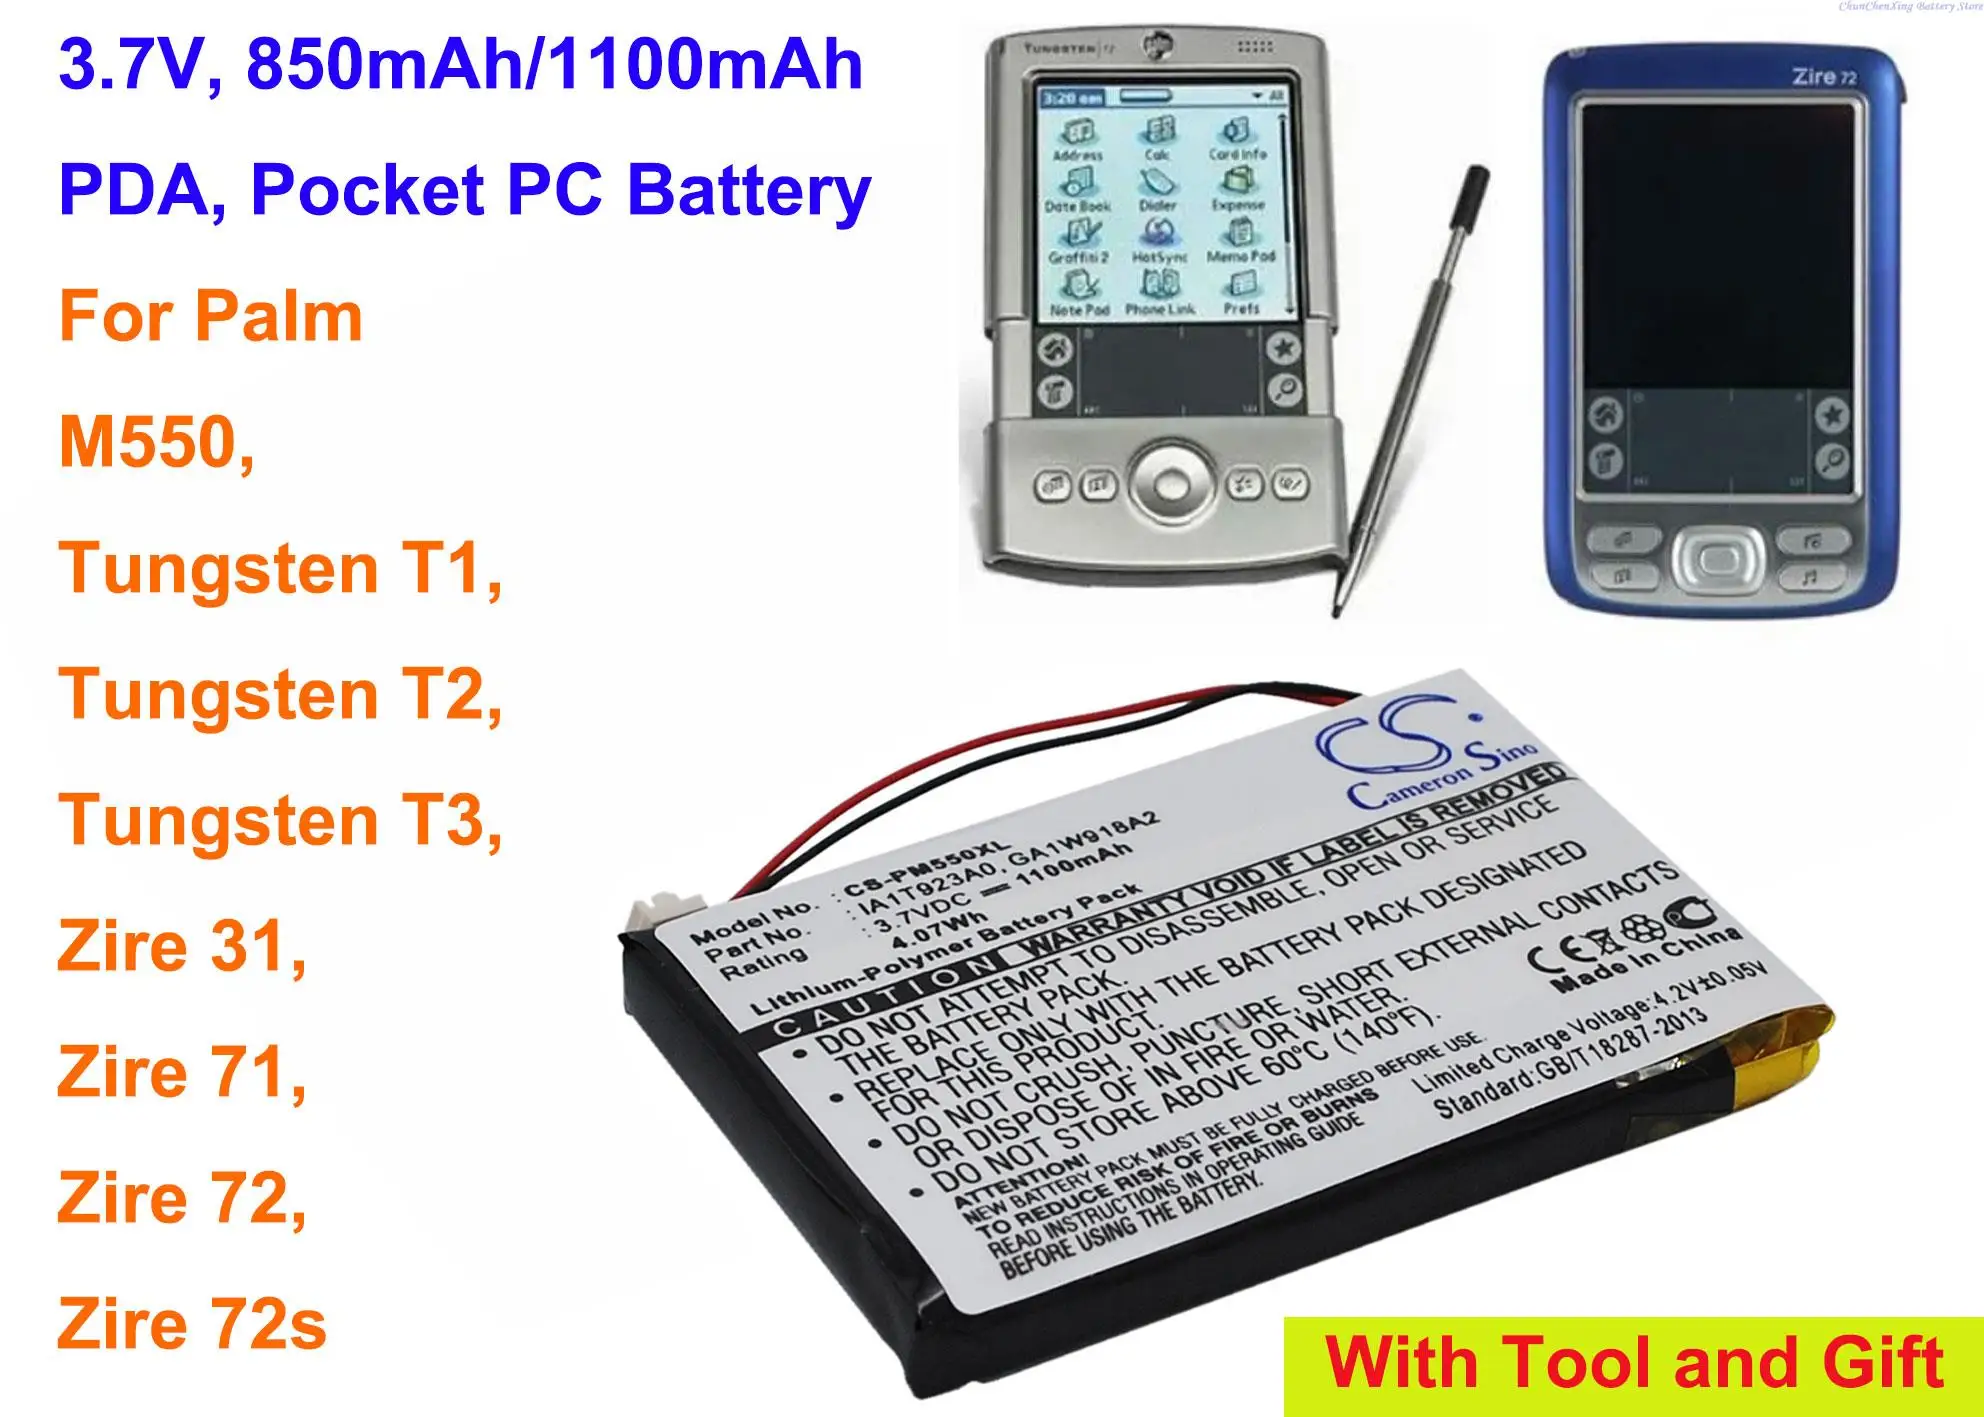 Cameron Sino 850mAh/1100mAh, acumulator pentru PDA Palm M550, Tungsten T1, Tungsten T2, Tungsten T3, Zire 31,Zire 71, Zire 72, Zire 72